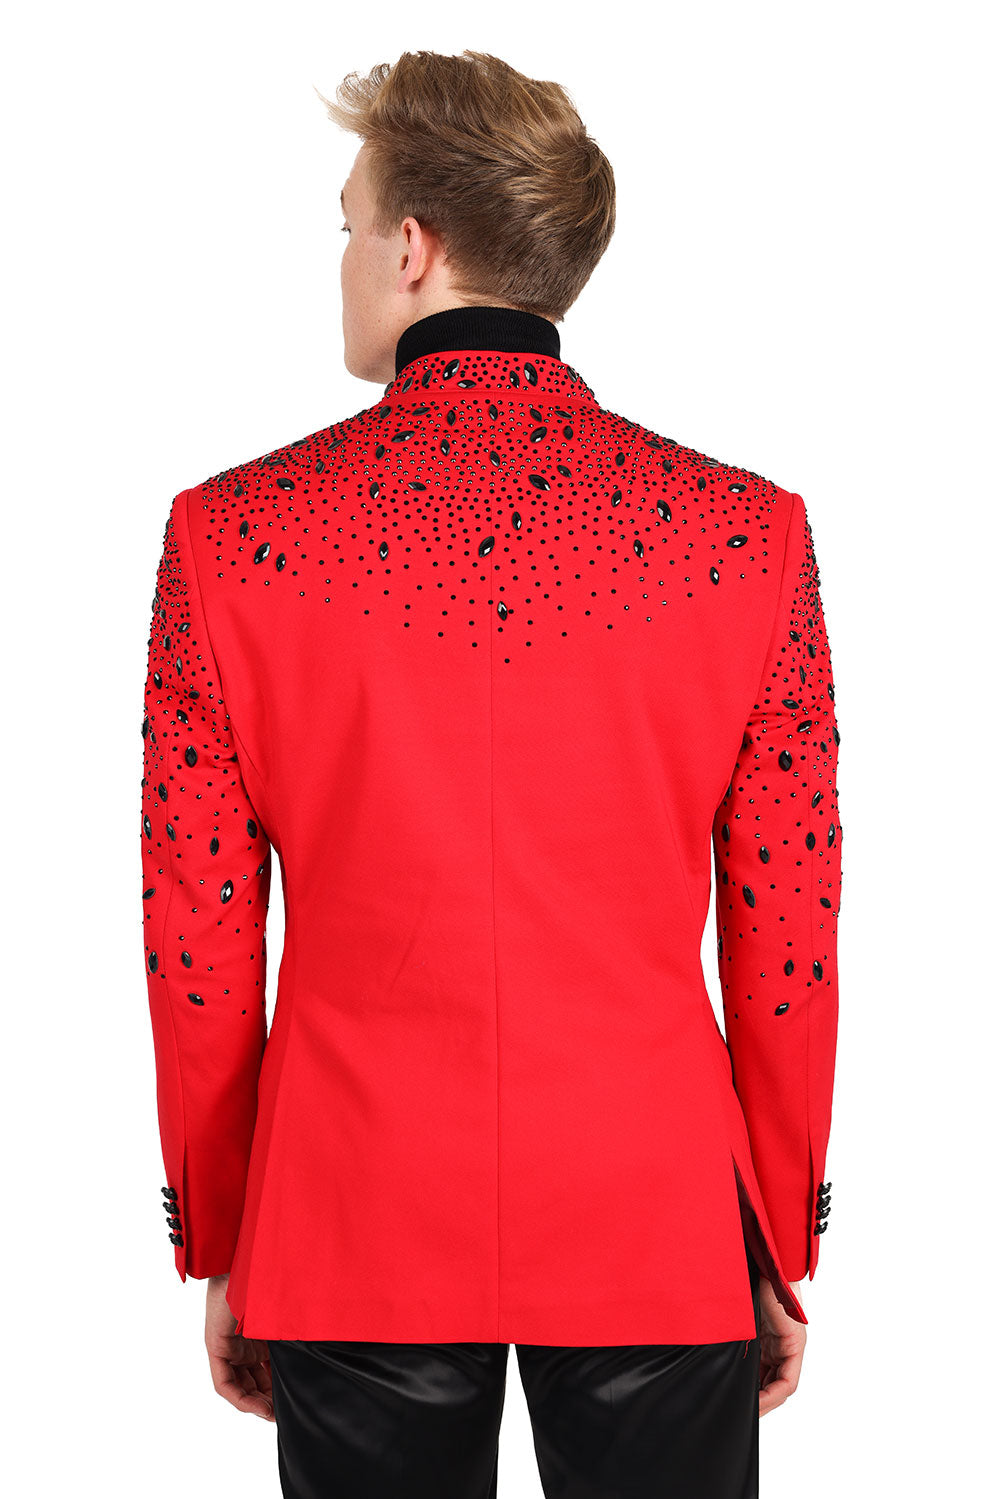 BARABAS Men's Luxury Rhinestone Lapel Collar Designer Blazer BL3080 Red Black